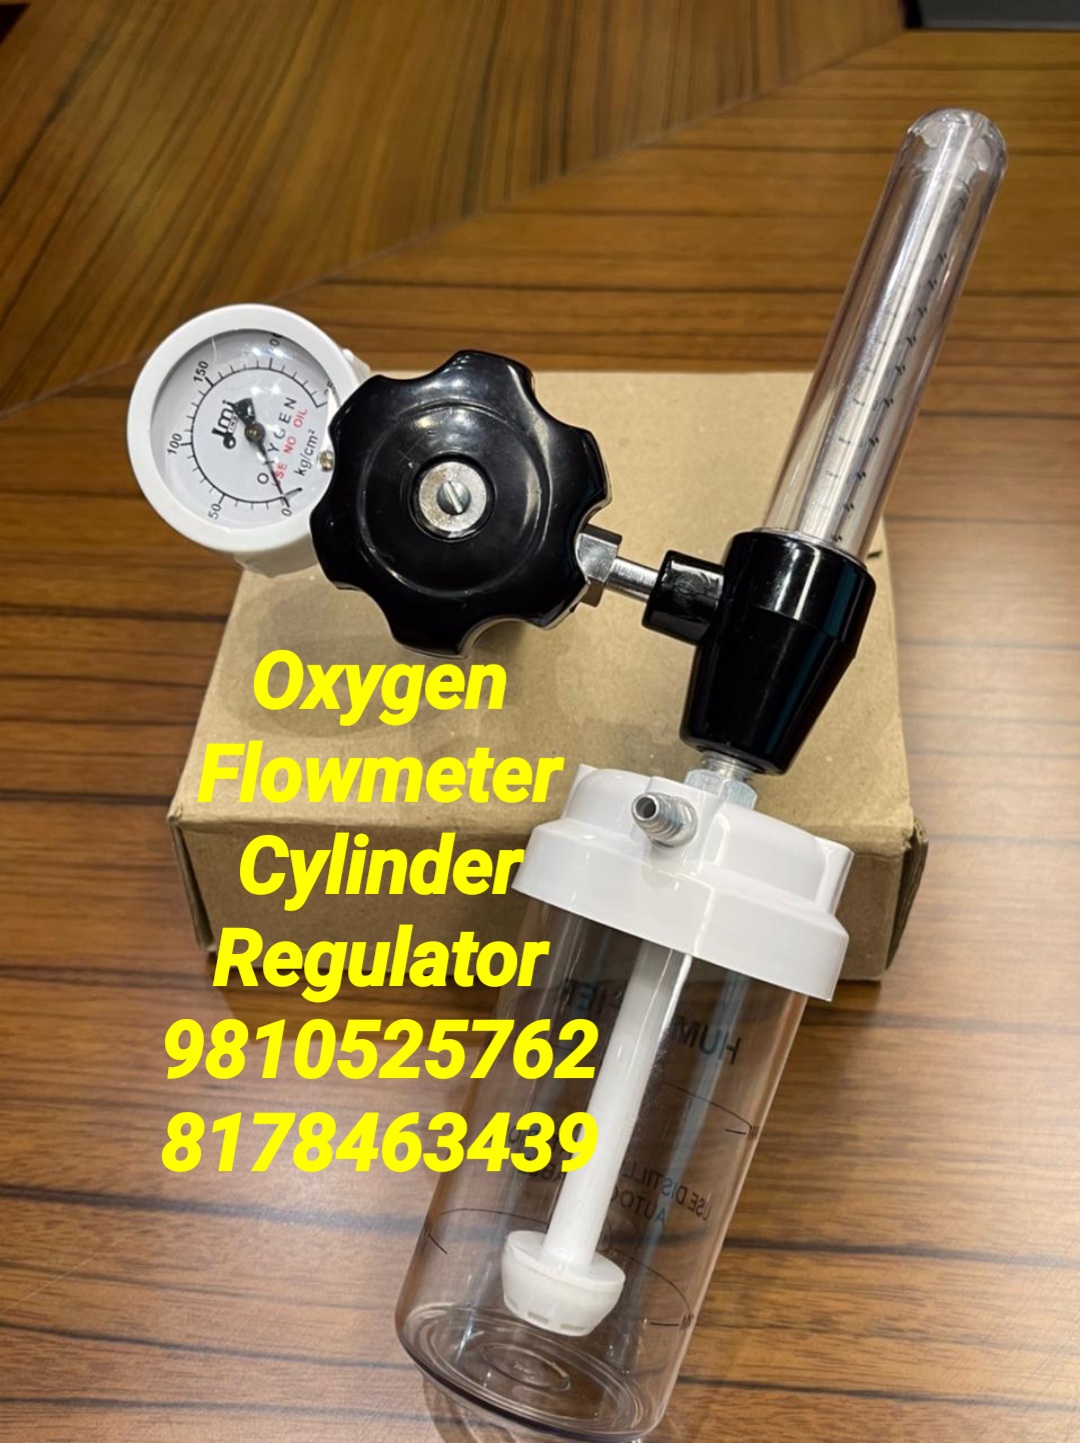 Best Oxygen Flowmeter Delhi Ghaziabad 8178463439